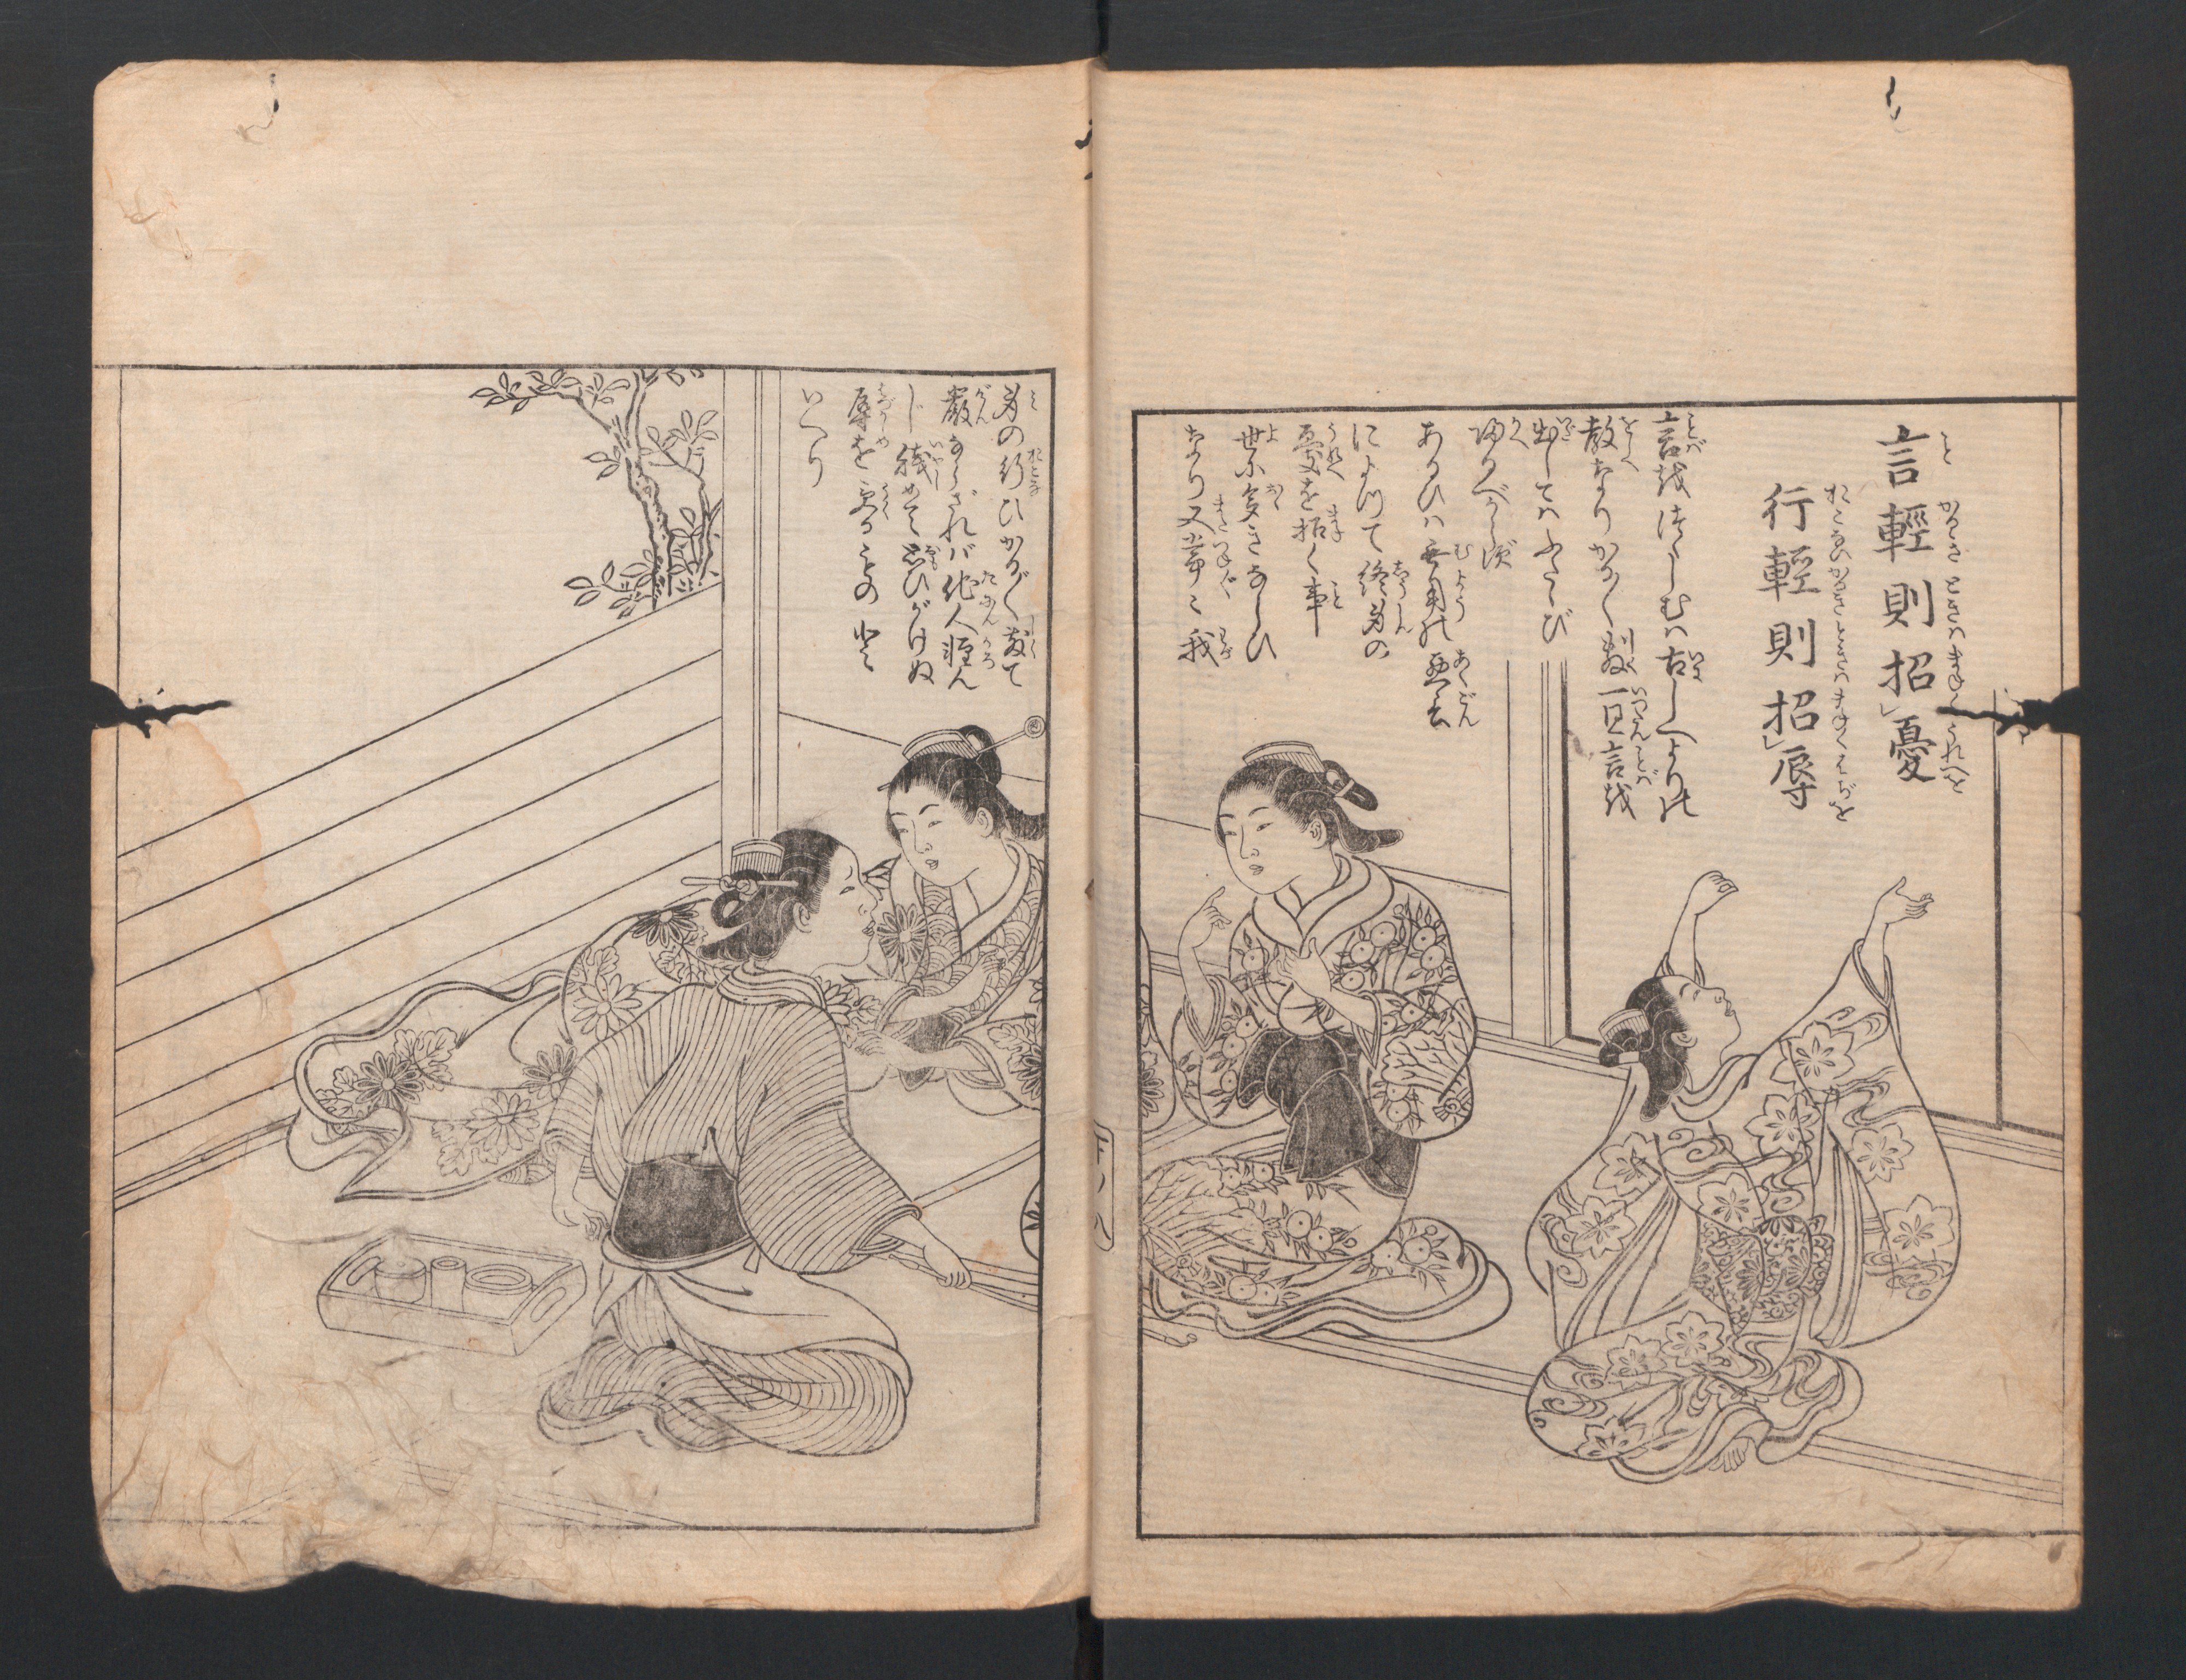 Nishikawa Sukenobu 西川祐信 | Illustrated Proverbs, The Illustrated